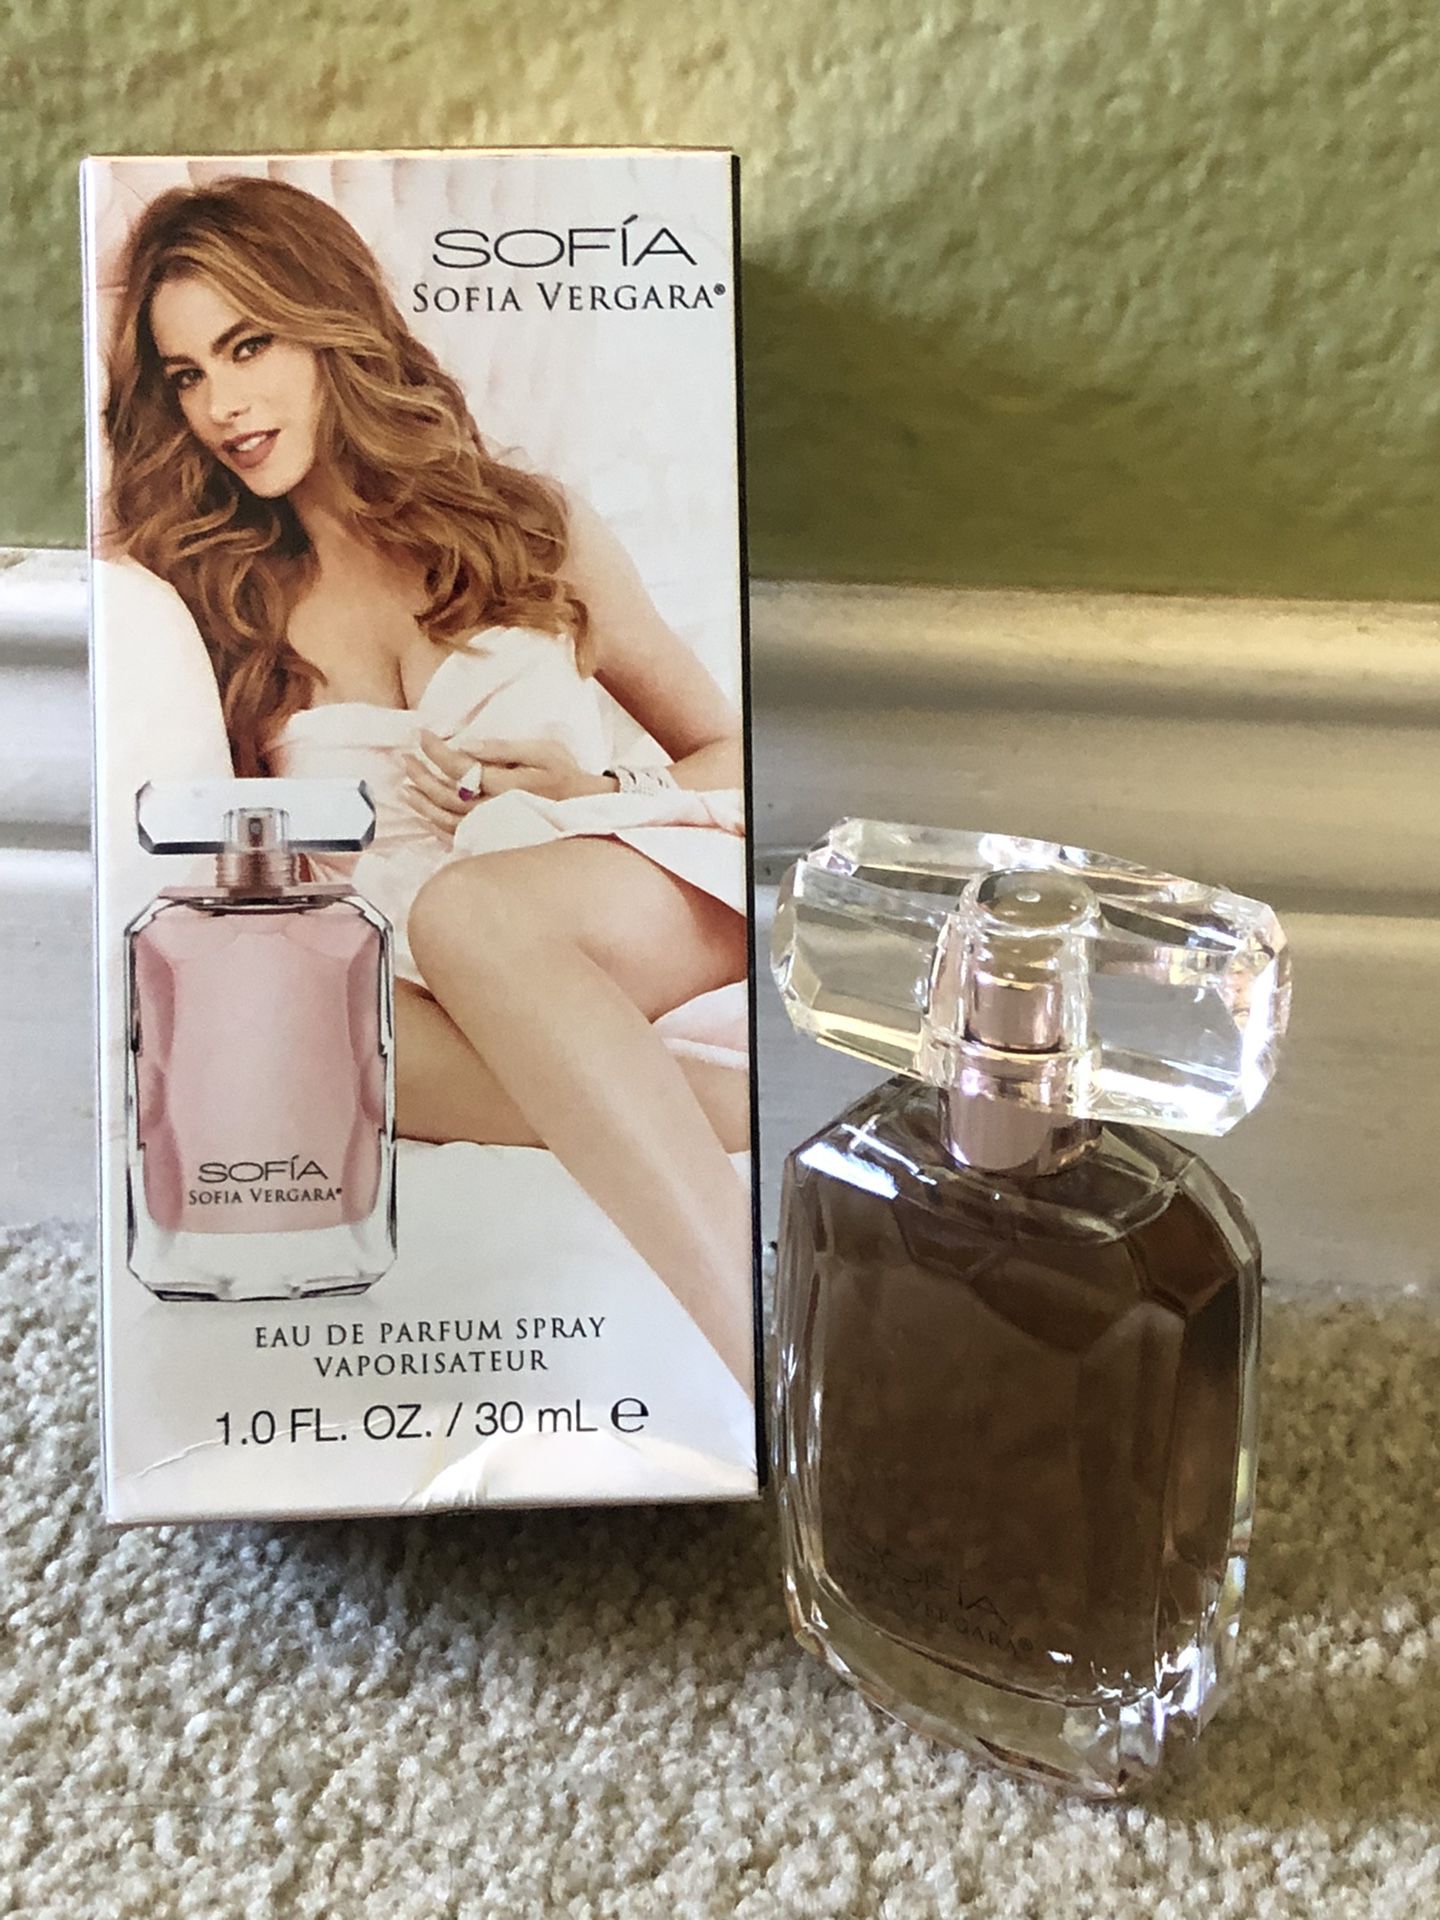 Sofia Vergara Perfume 1.0 Oz